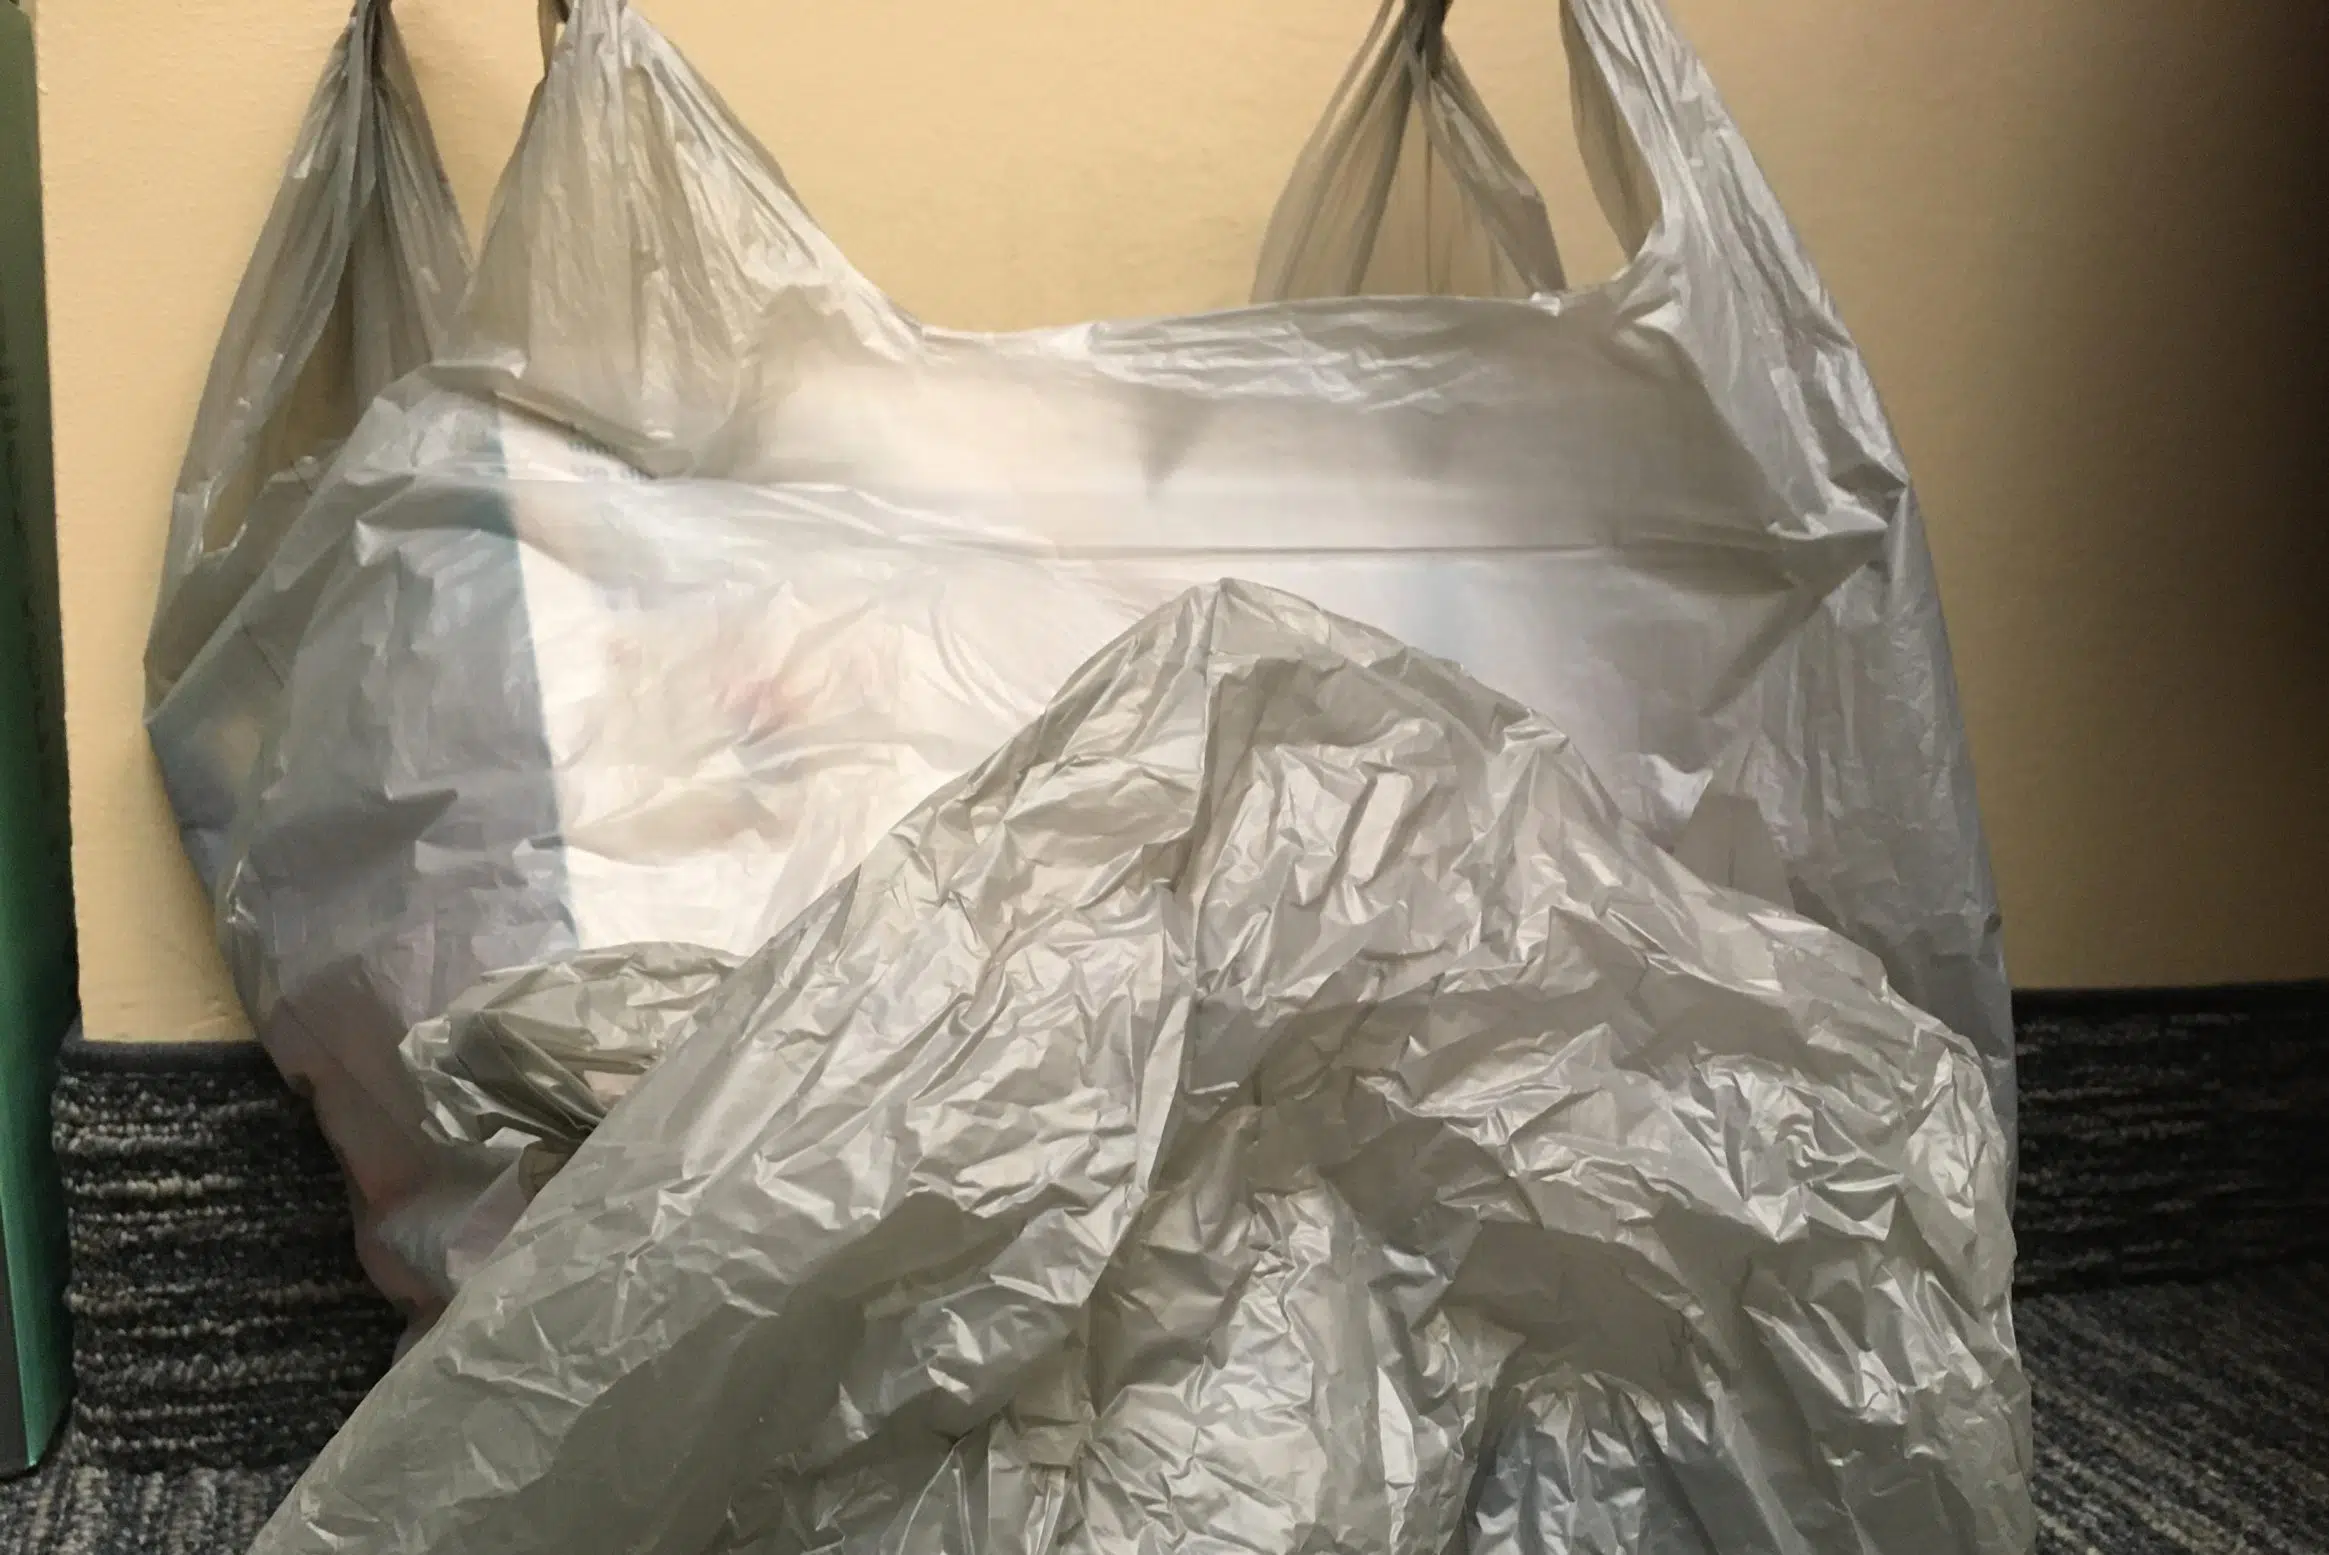 City of Prince Albert bans plastic checkout bags